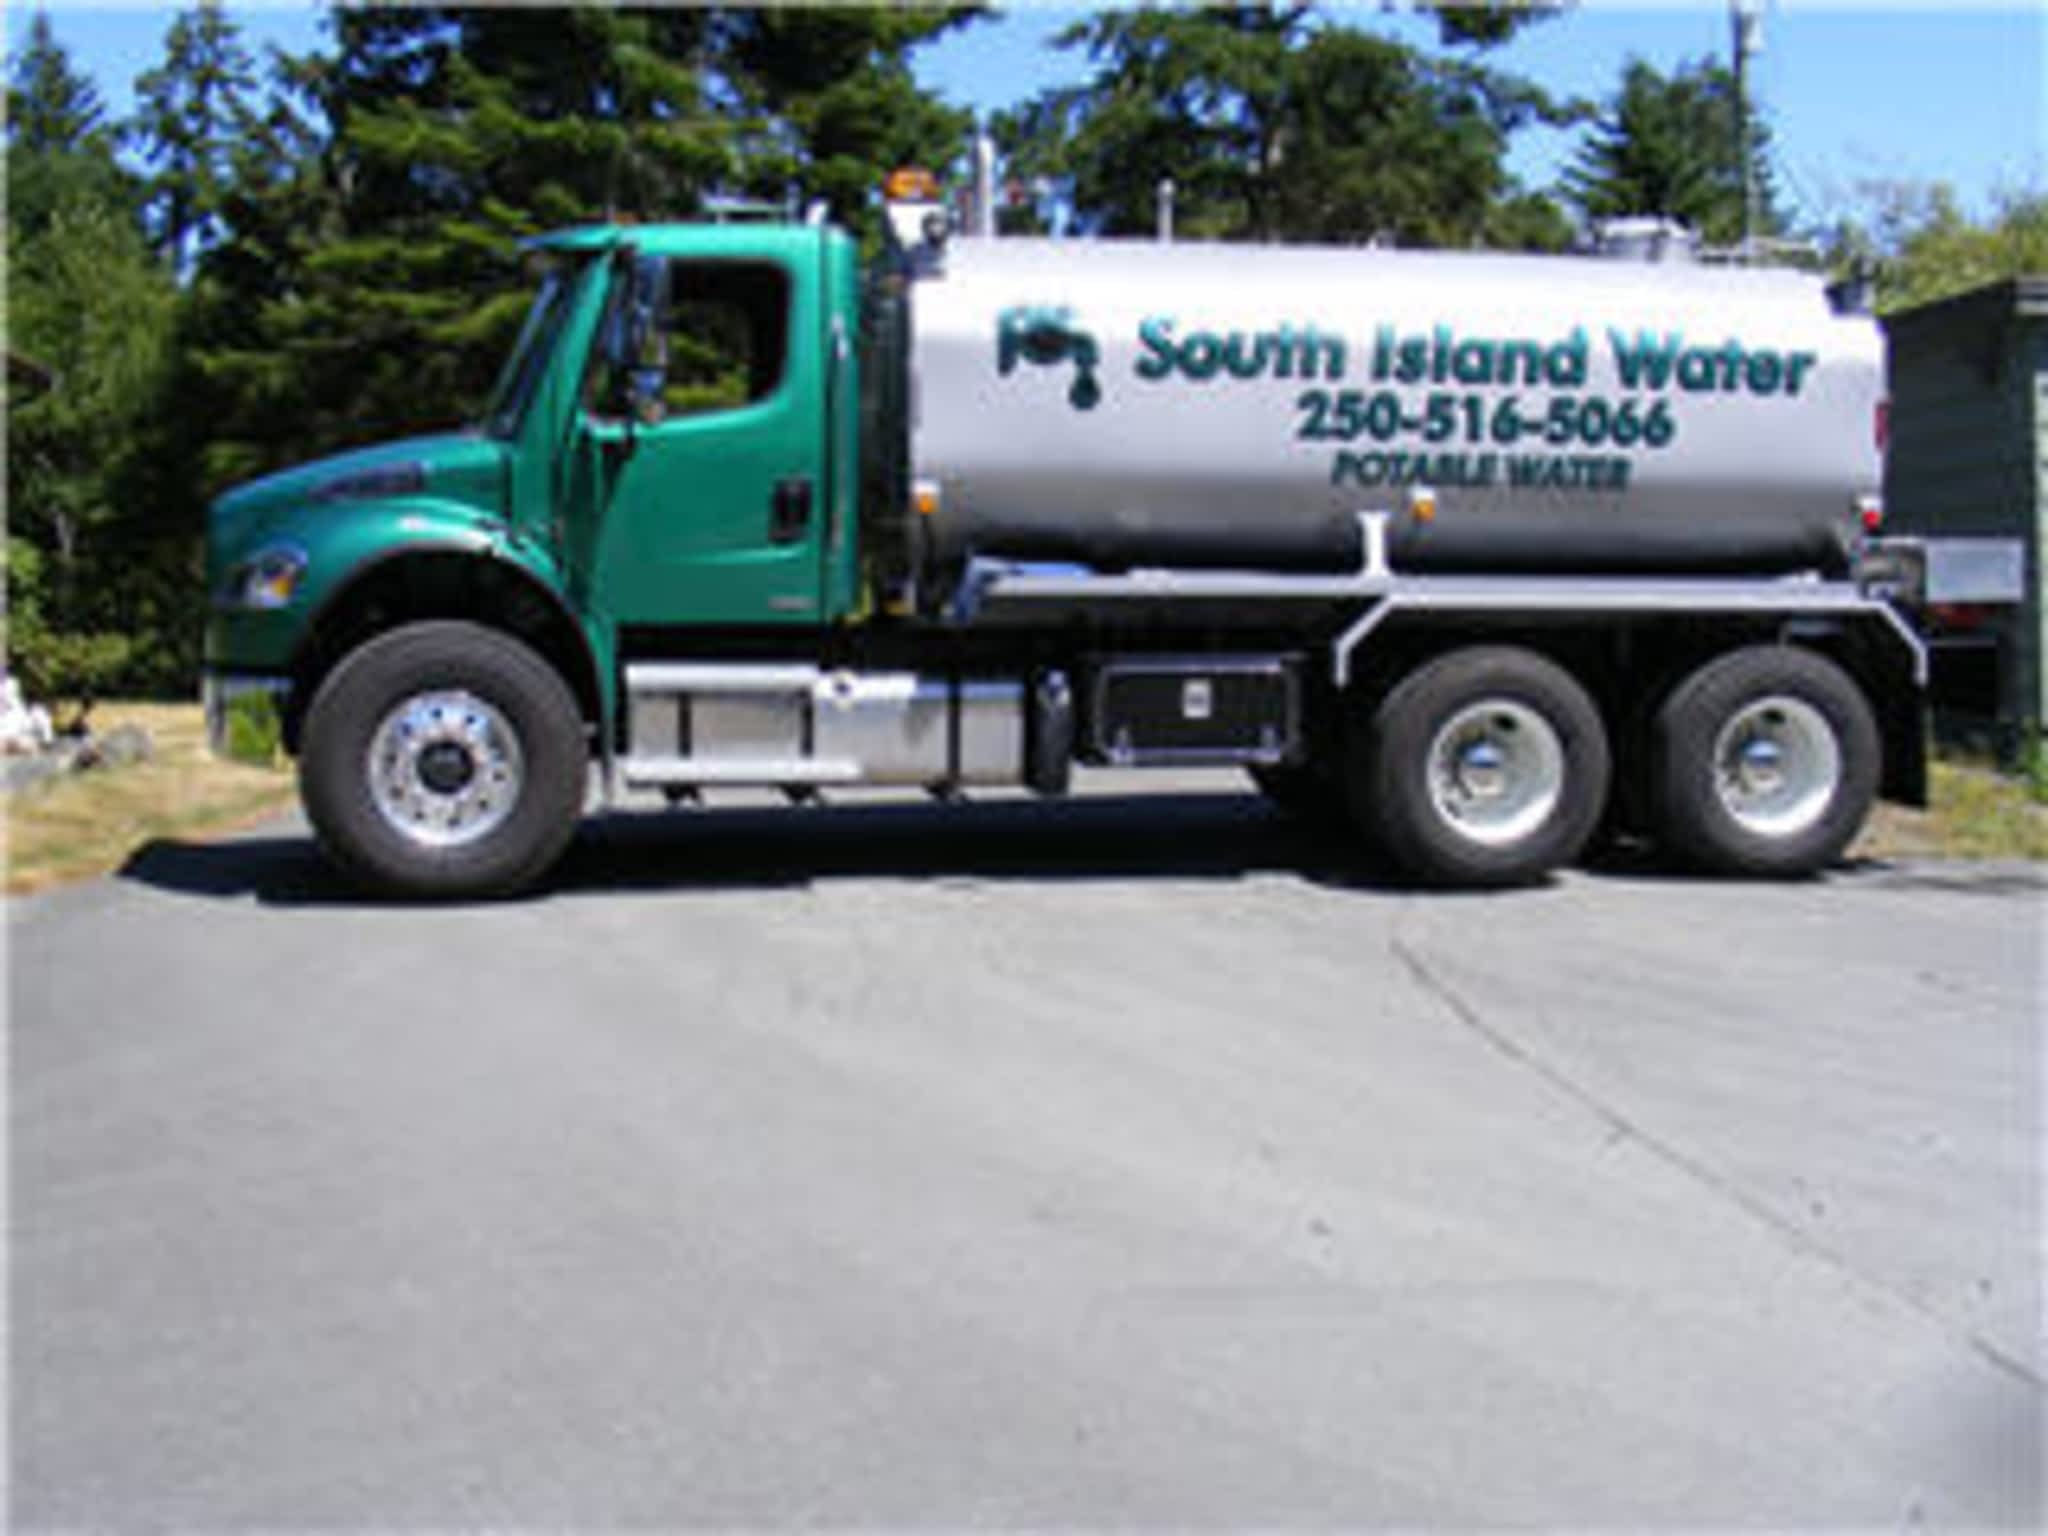 photo South Island Water Ltd